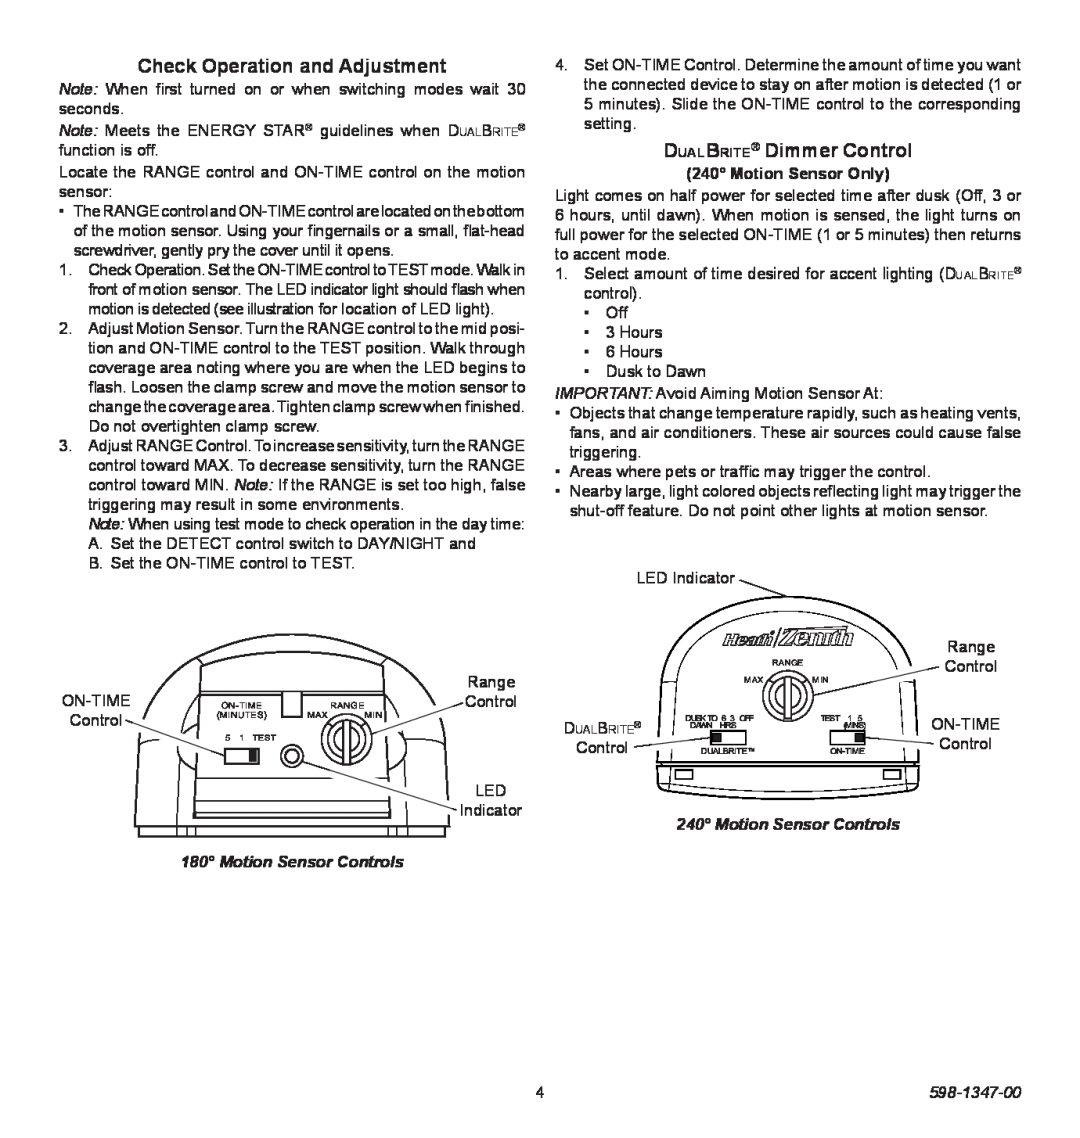 Heath Zenith 598-1347-00 Check Operation and Adjustment, DualBrite Dimmer Control, Motion Sensor Controls 